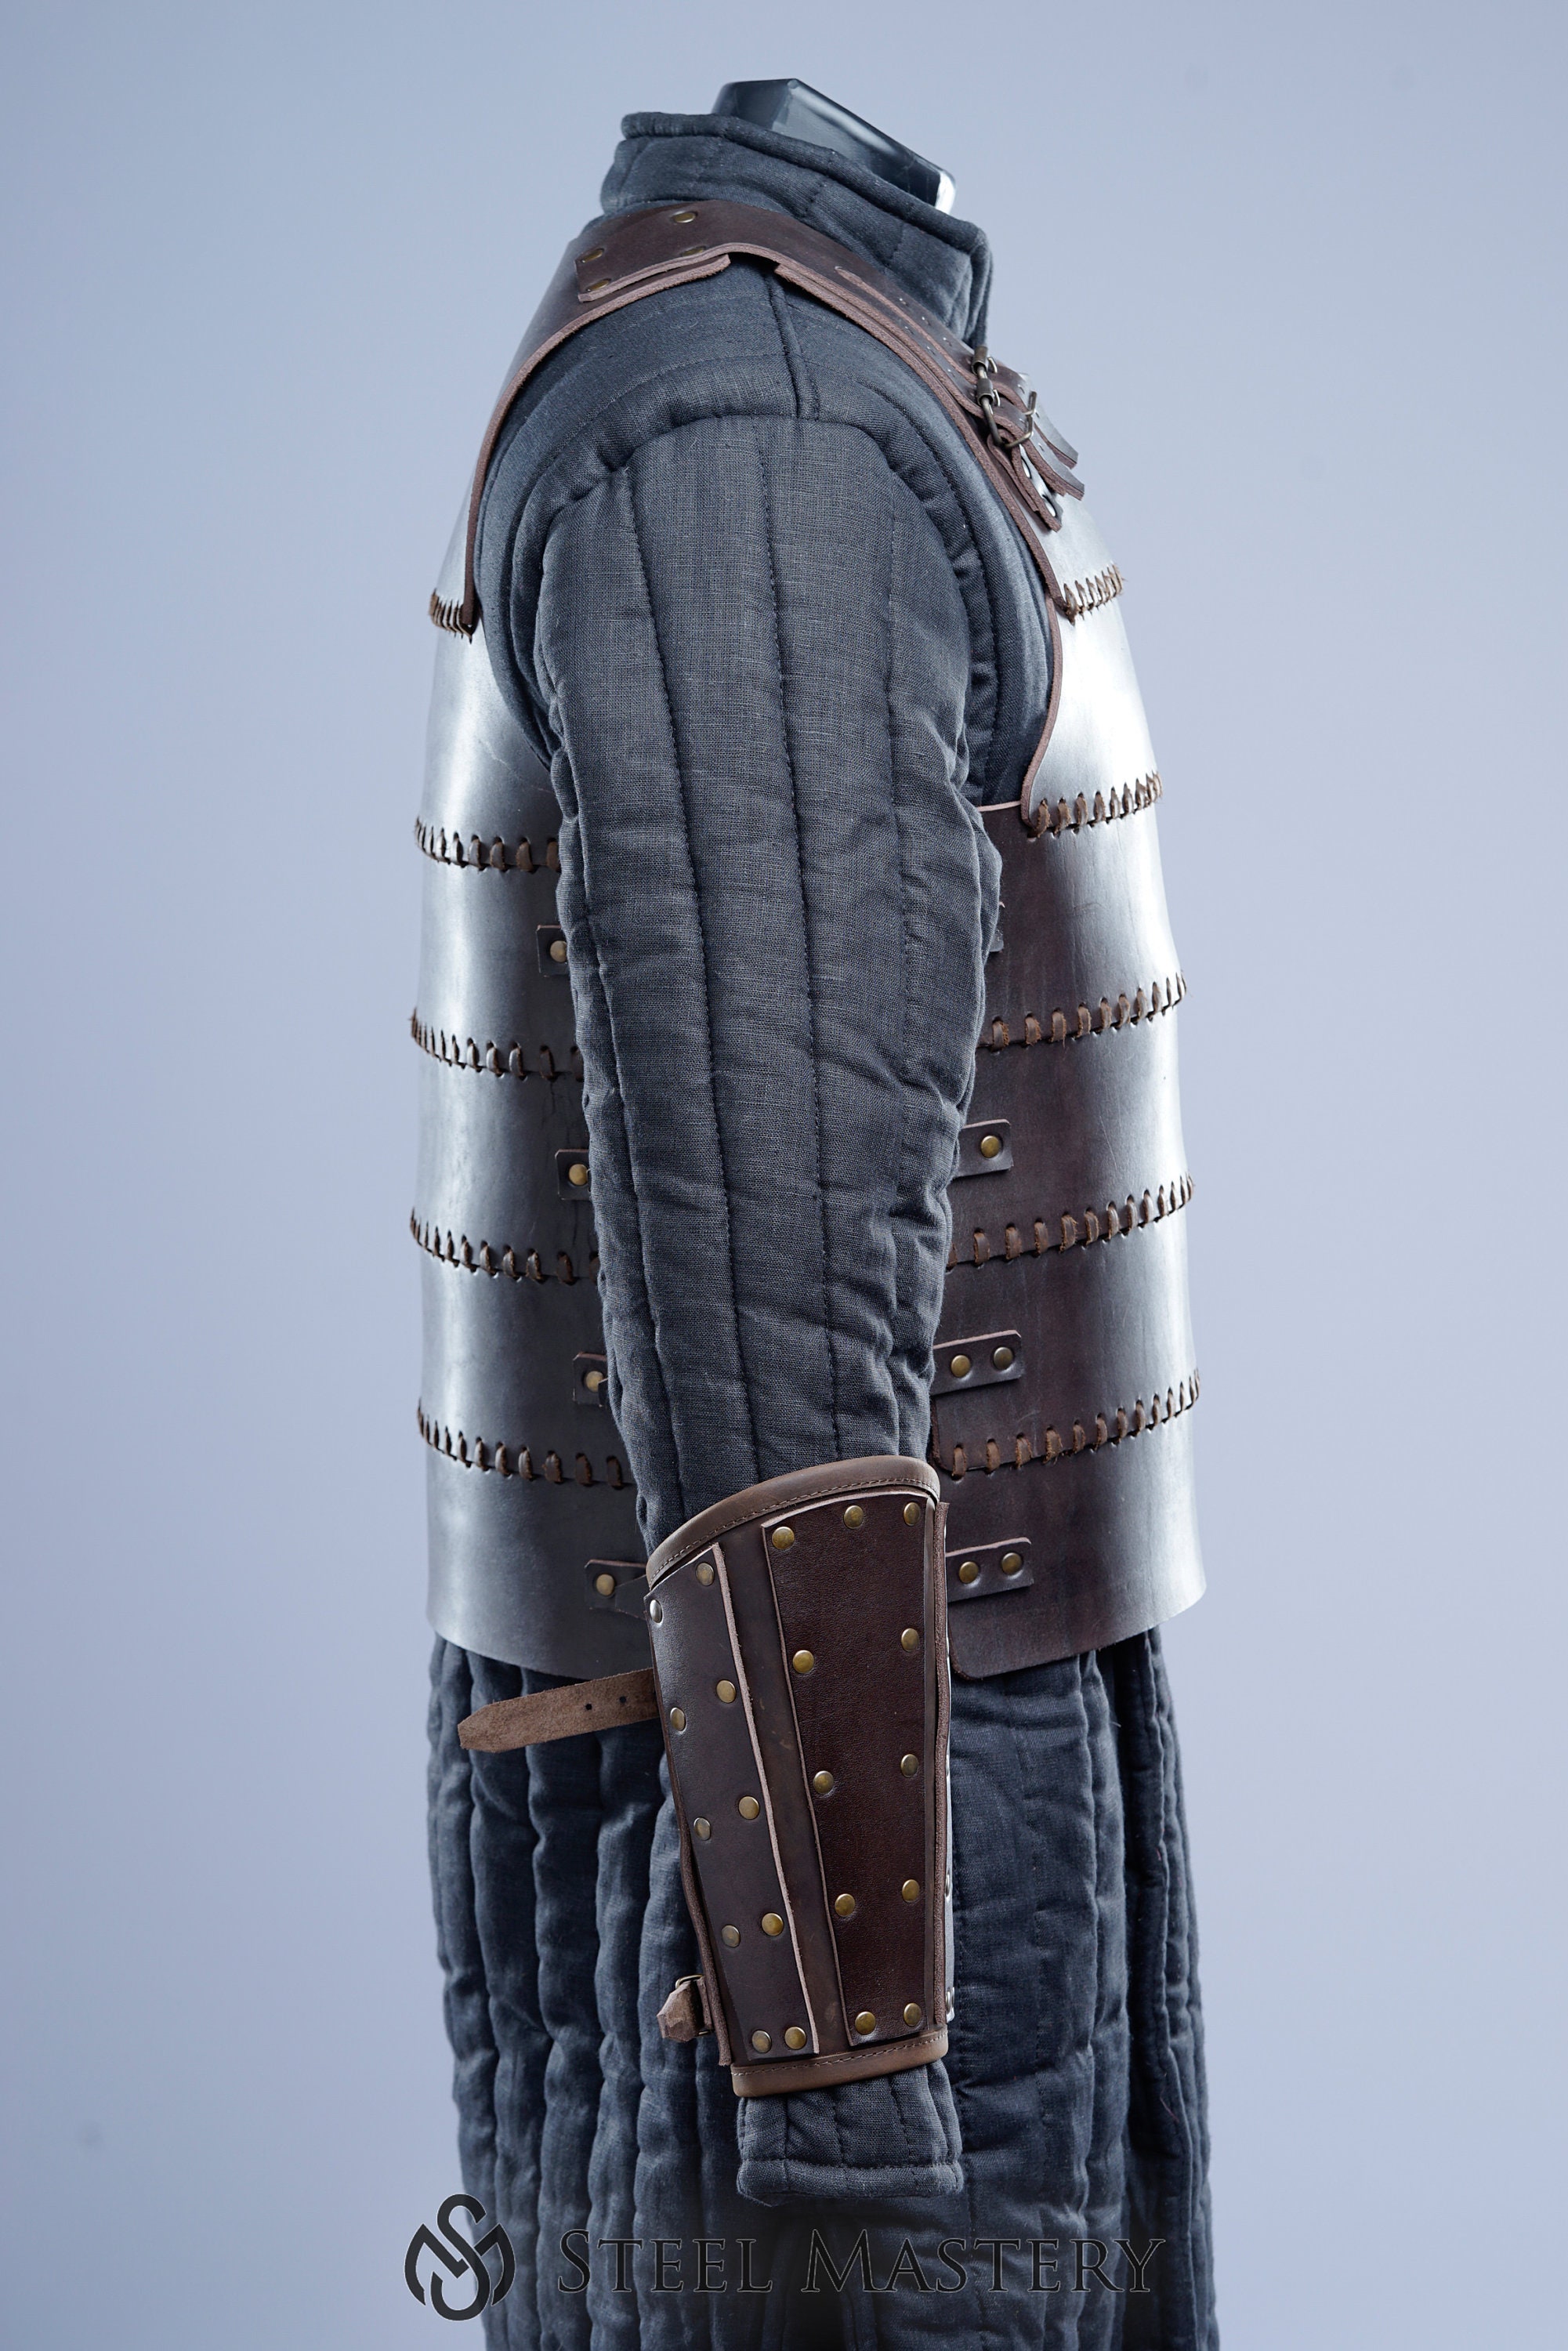 Coraza vikinga lamelar de cuero, armadura de fantasía para eventos  medievales e históricos